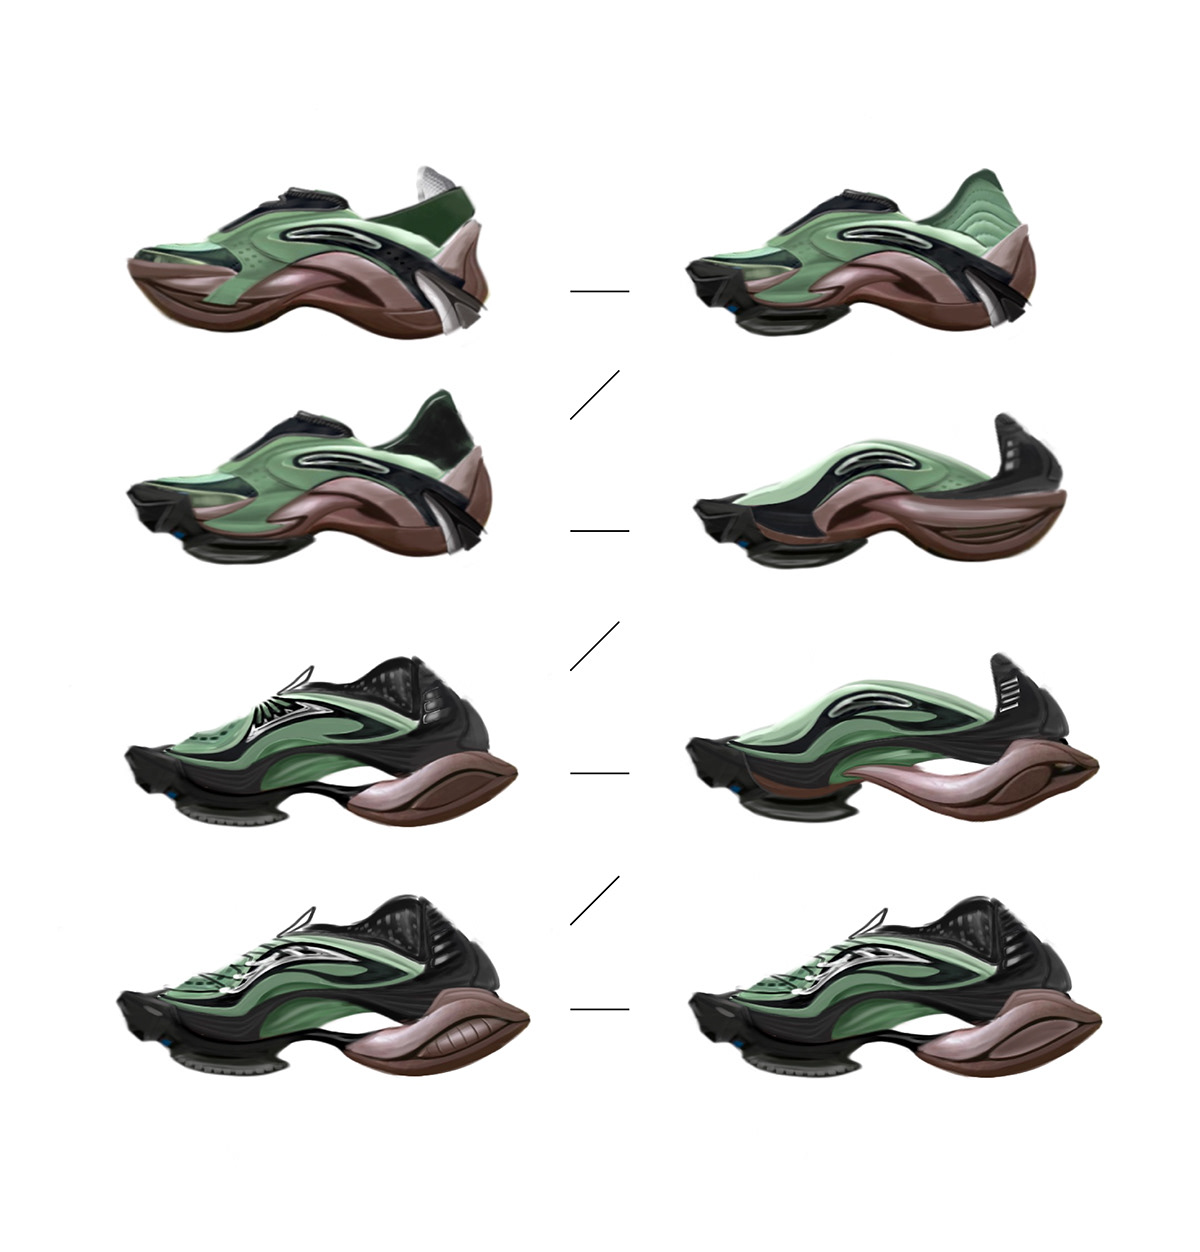 3D blender design Fashion  footwear industrial design  shoes sneakers